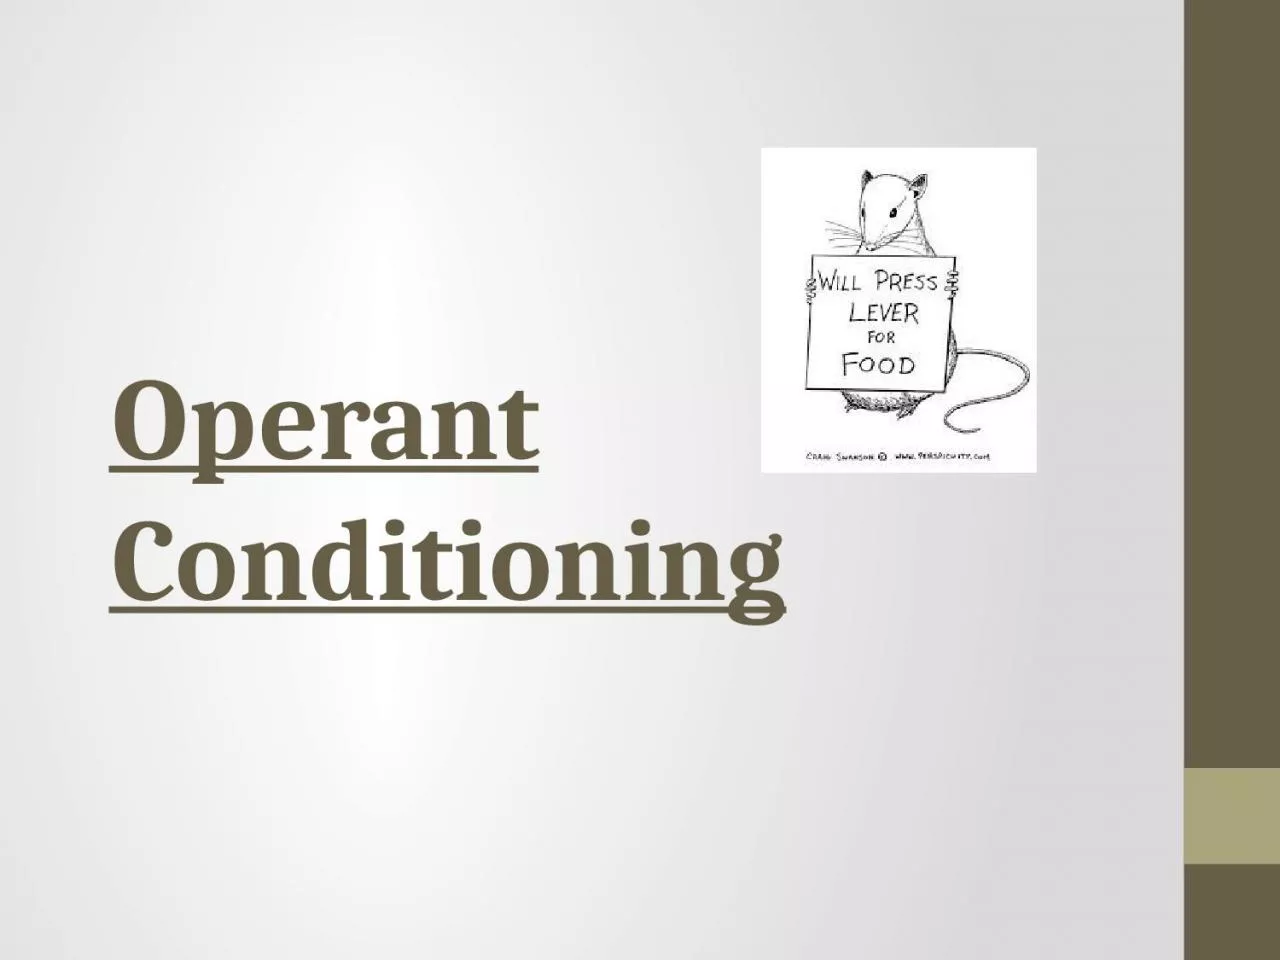 Operant Conditioning Links